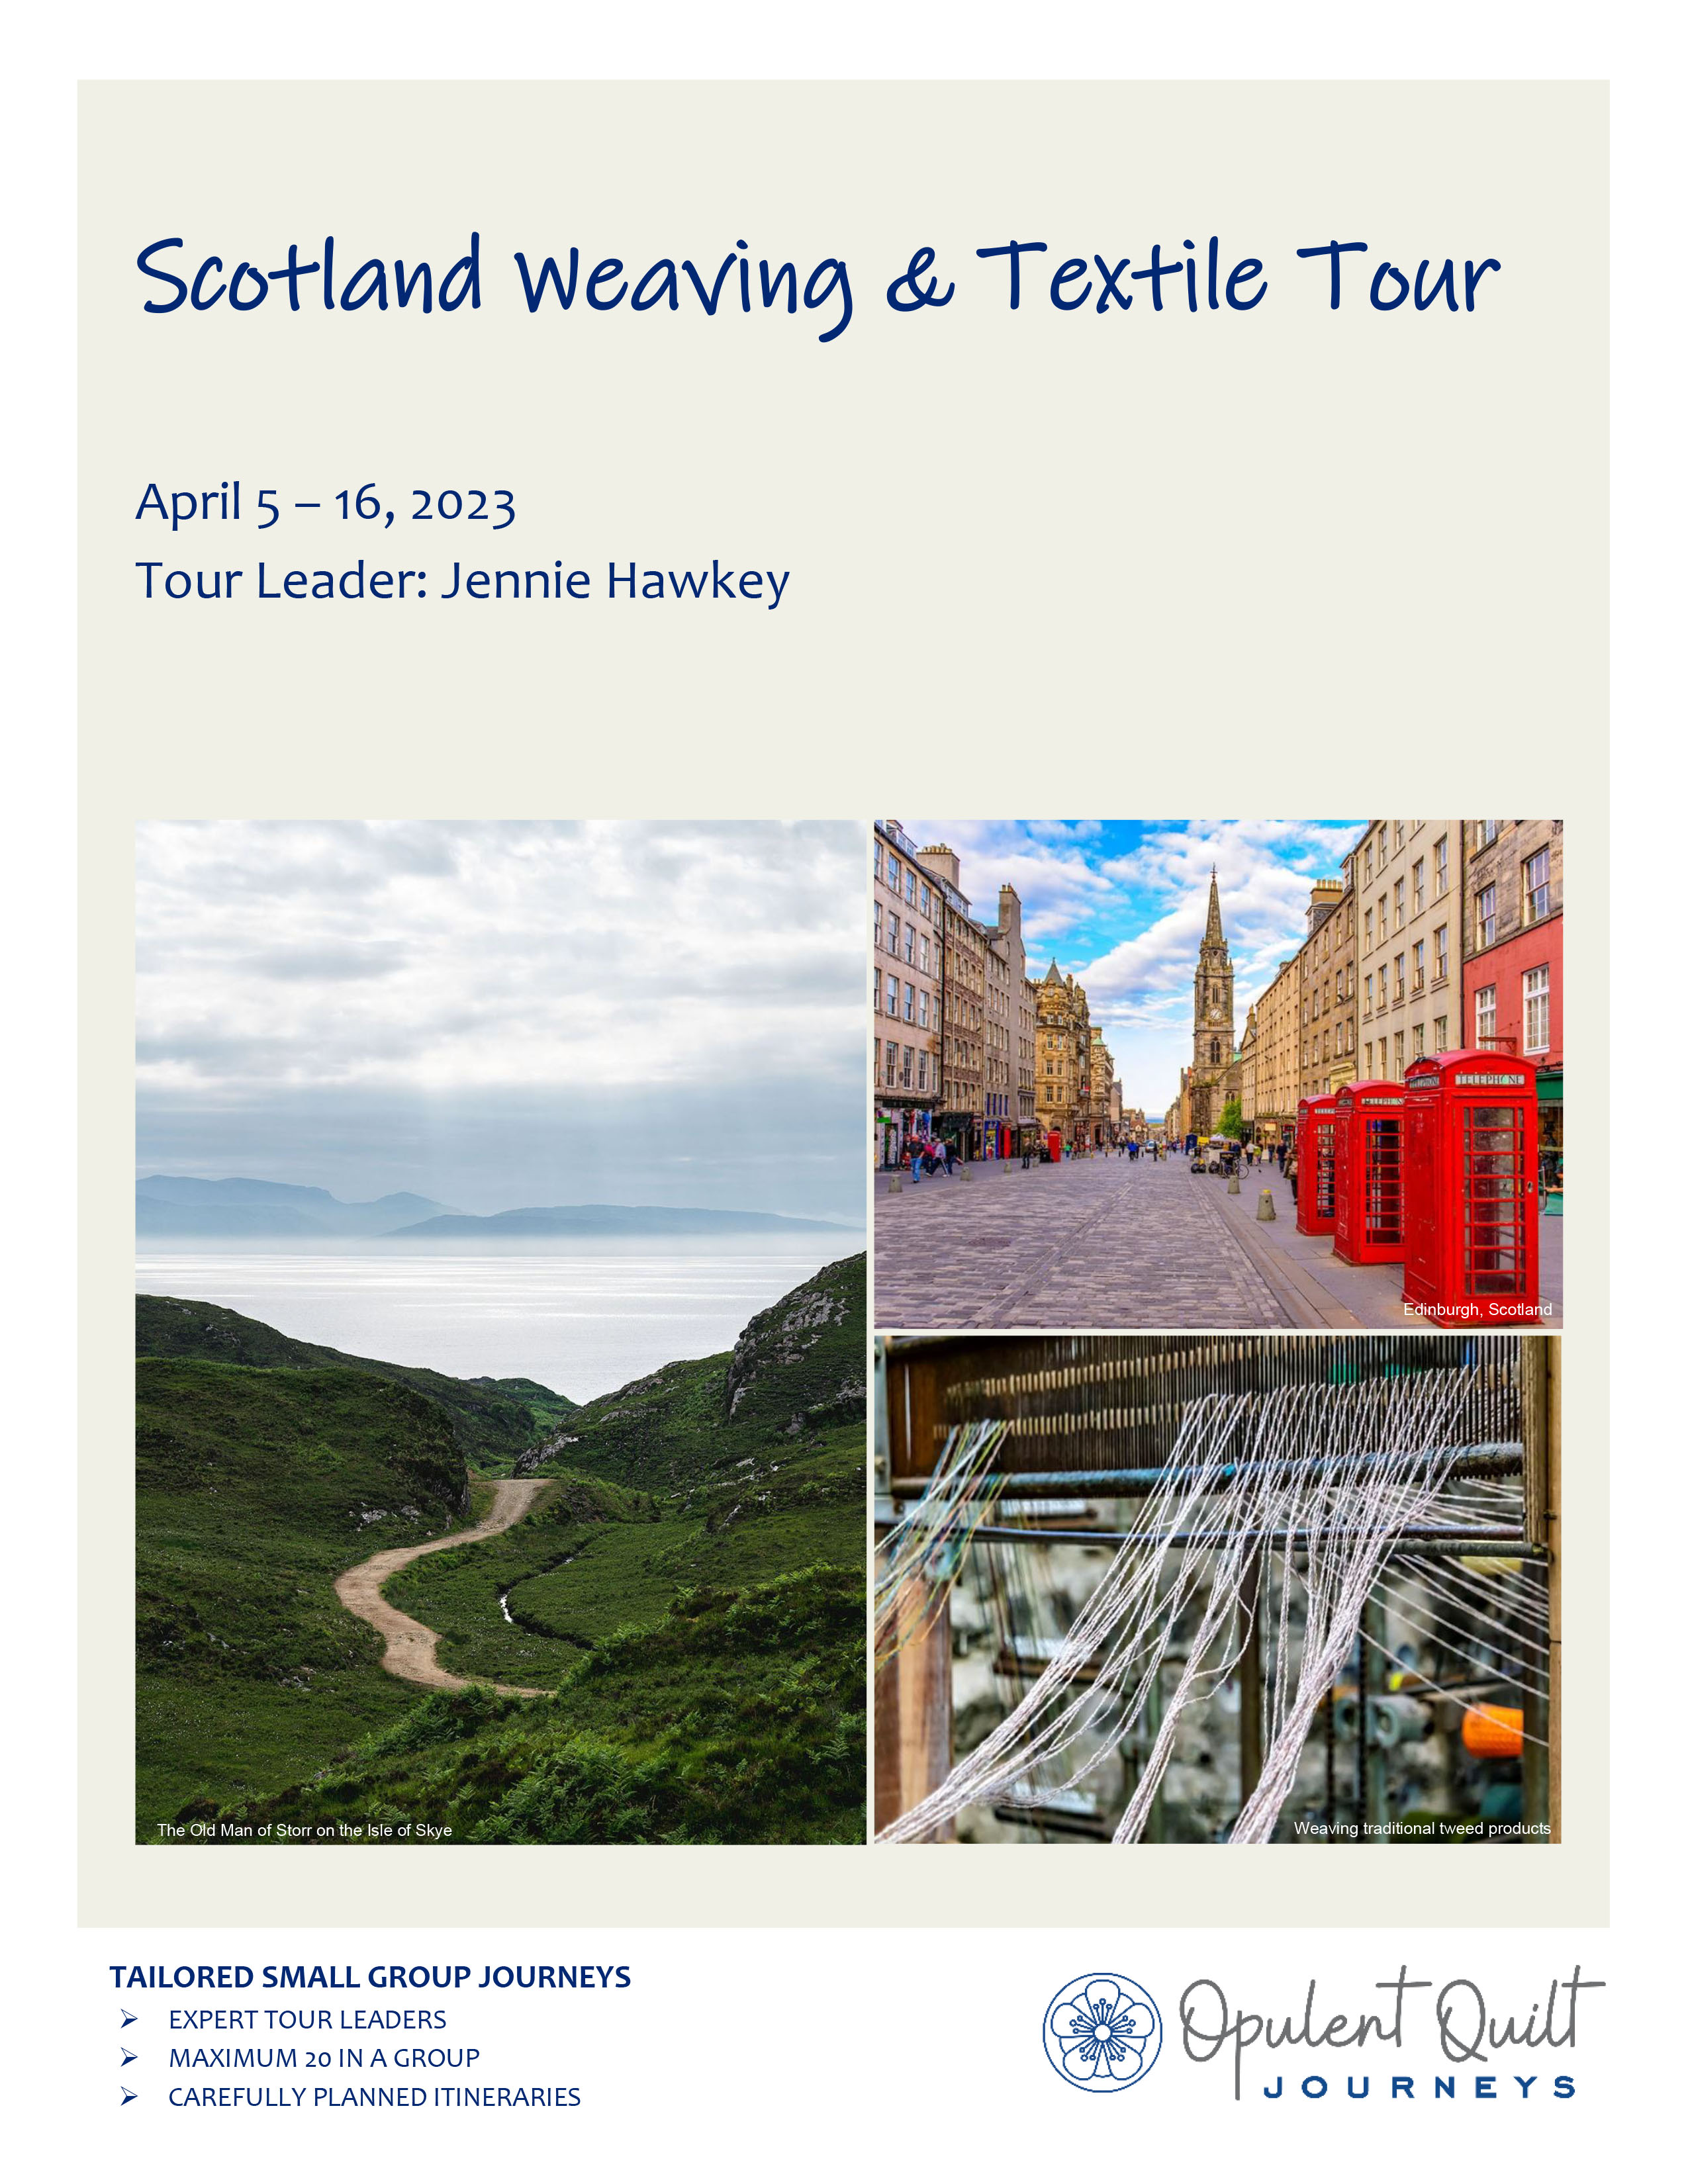 Scotland Weaving and Textile Tour brochure